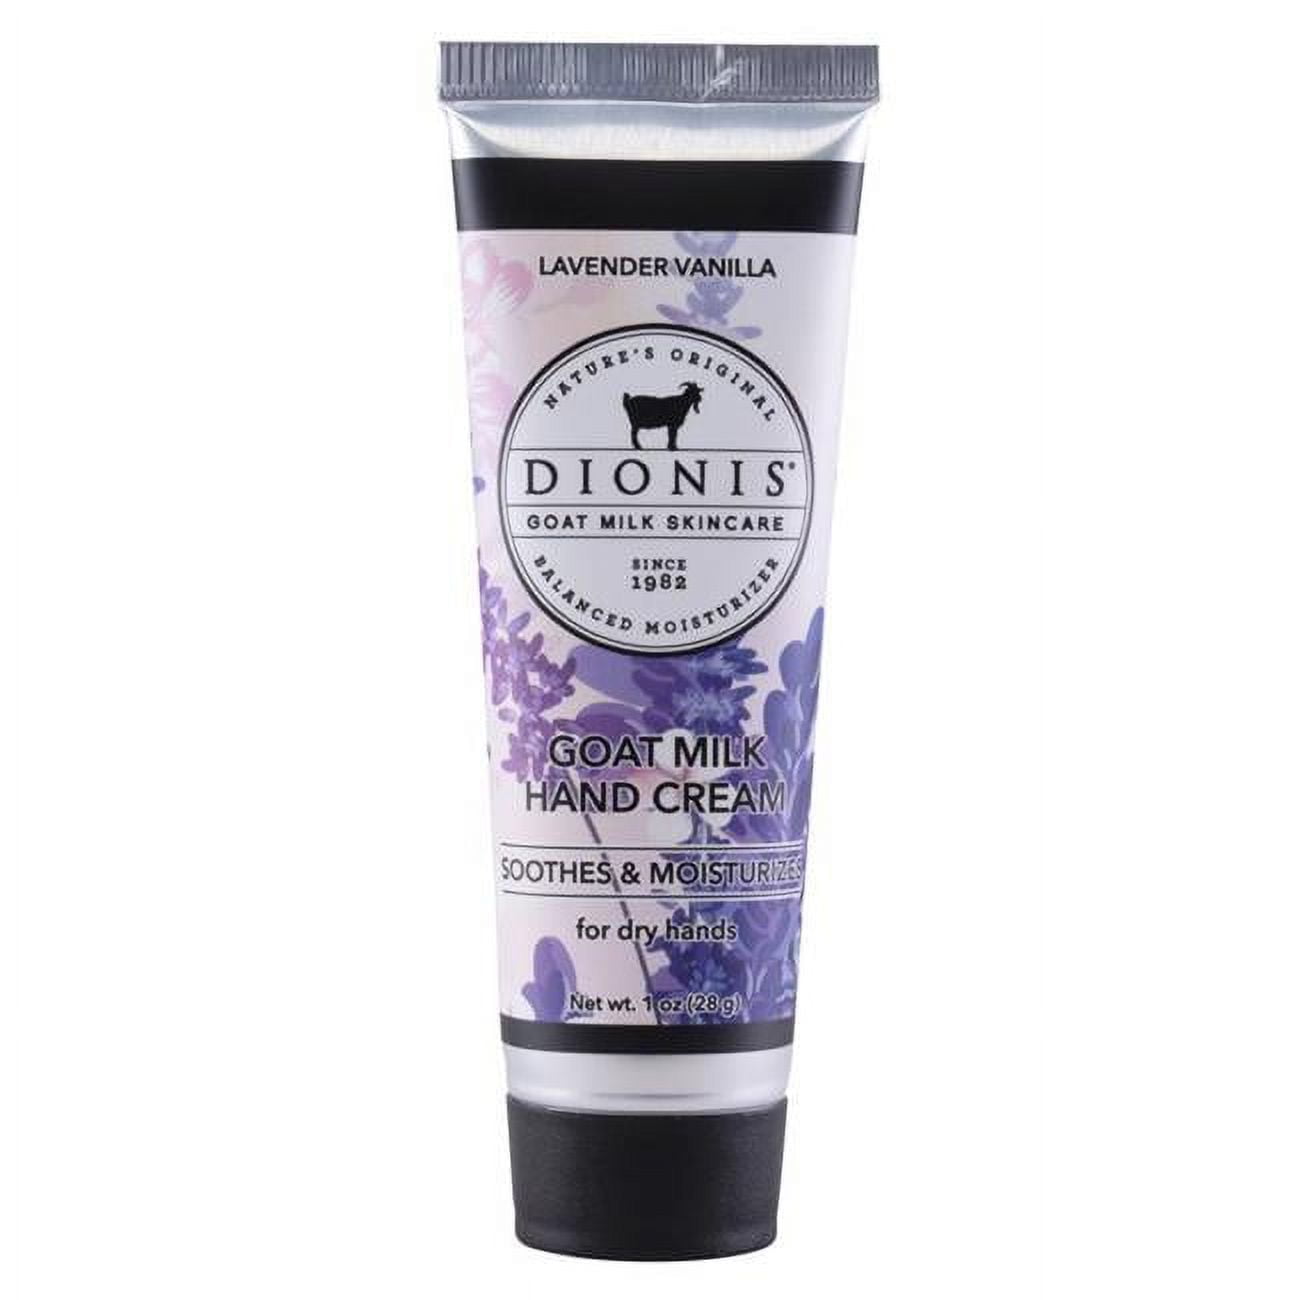 Picture of Dionis Goat Milk Skare 1026774 1 oz Lavender Vanilla Scent Hand Cream - Pack of 6